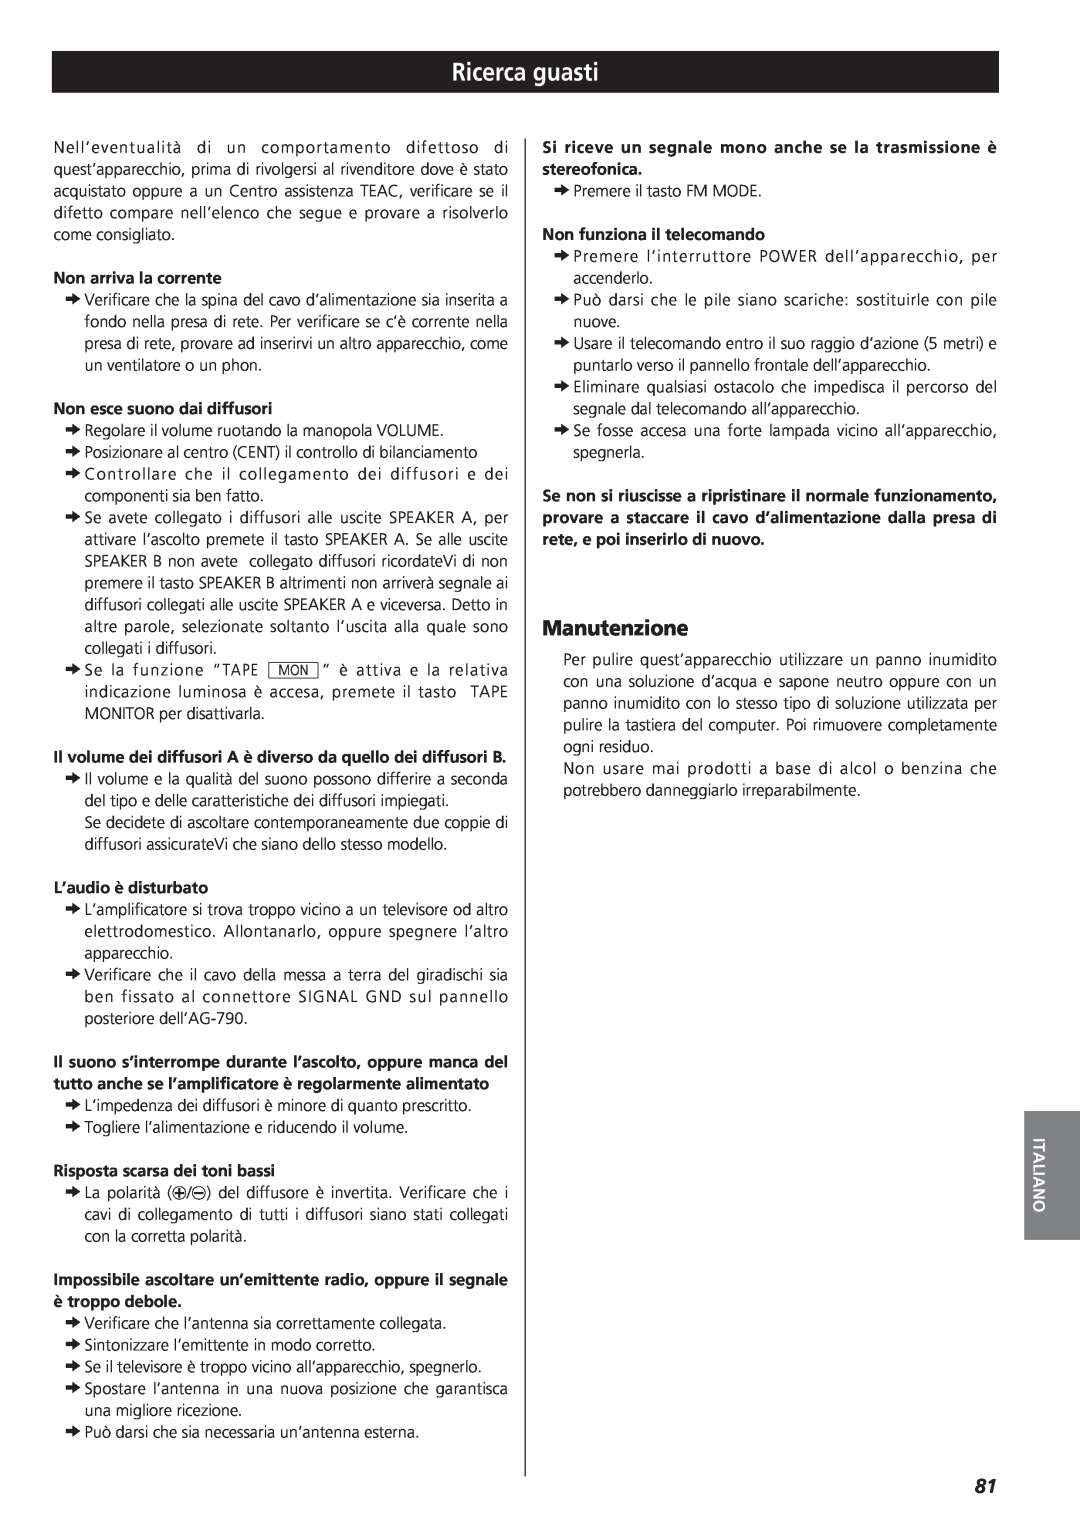 Teac AG-790 owner manual Ricerca guasti, Manutenzione, Italiano 